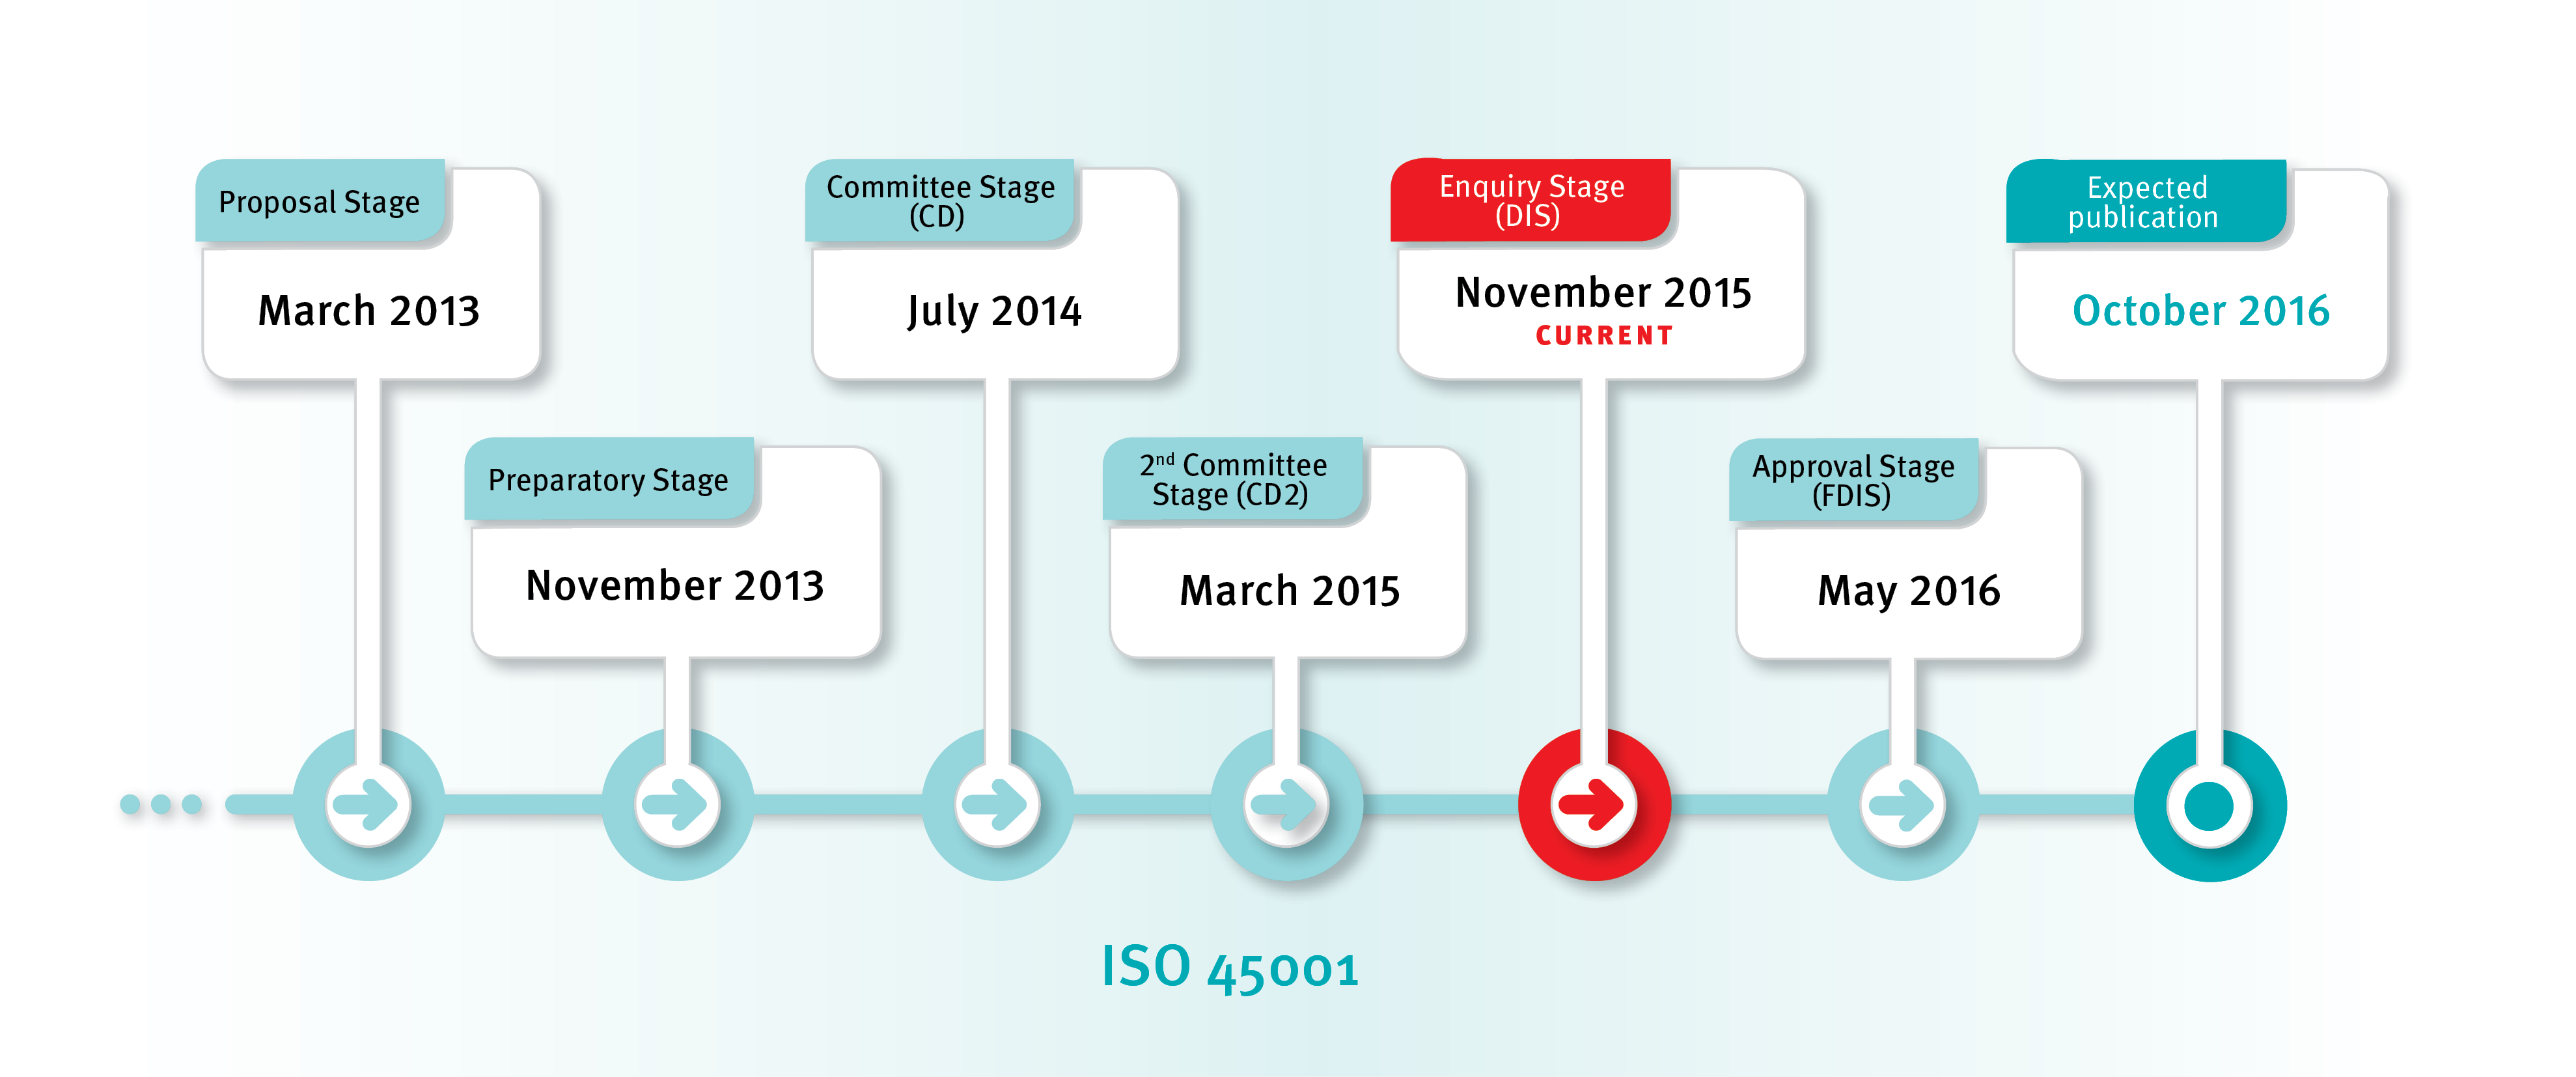 ISO 45001 Timeline